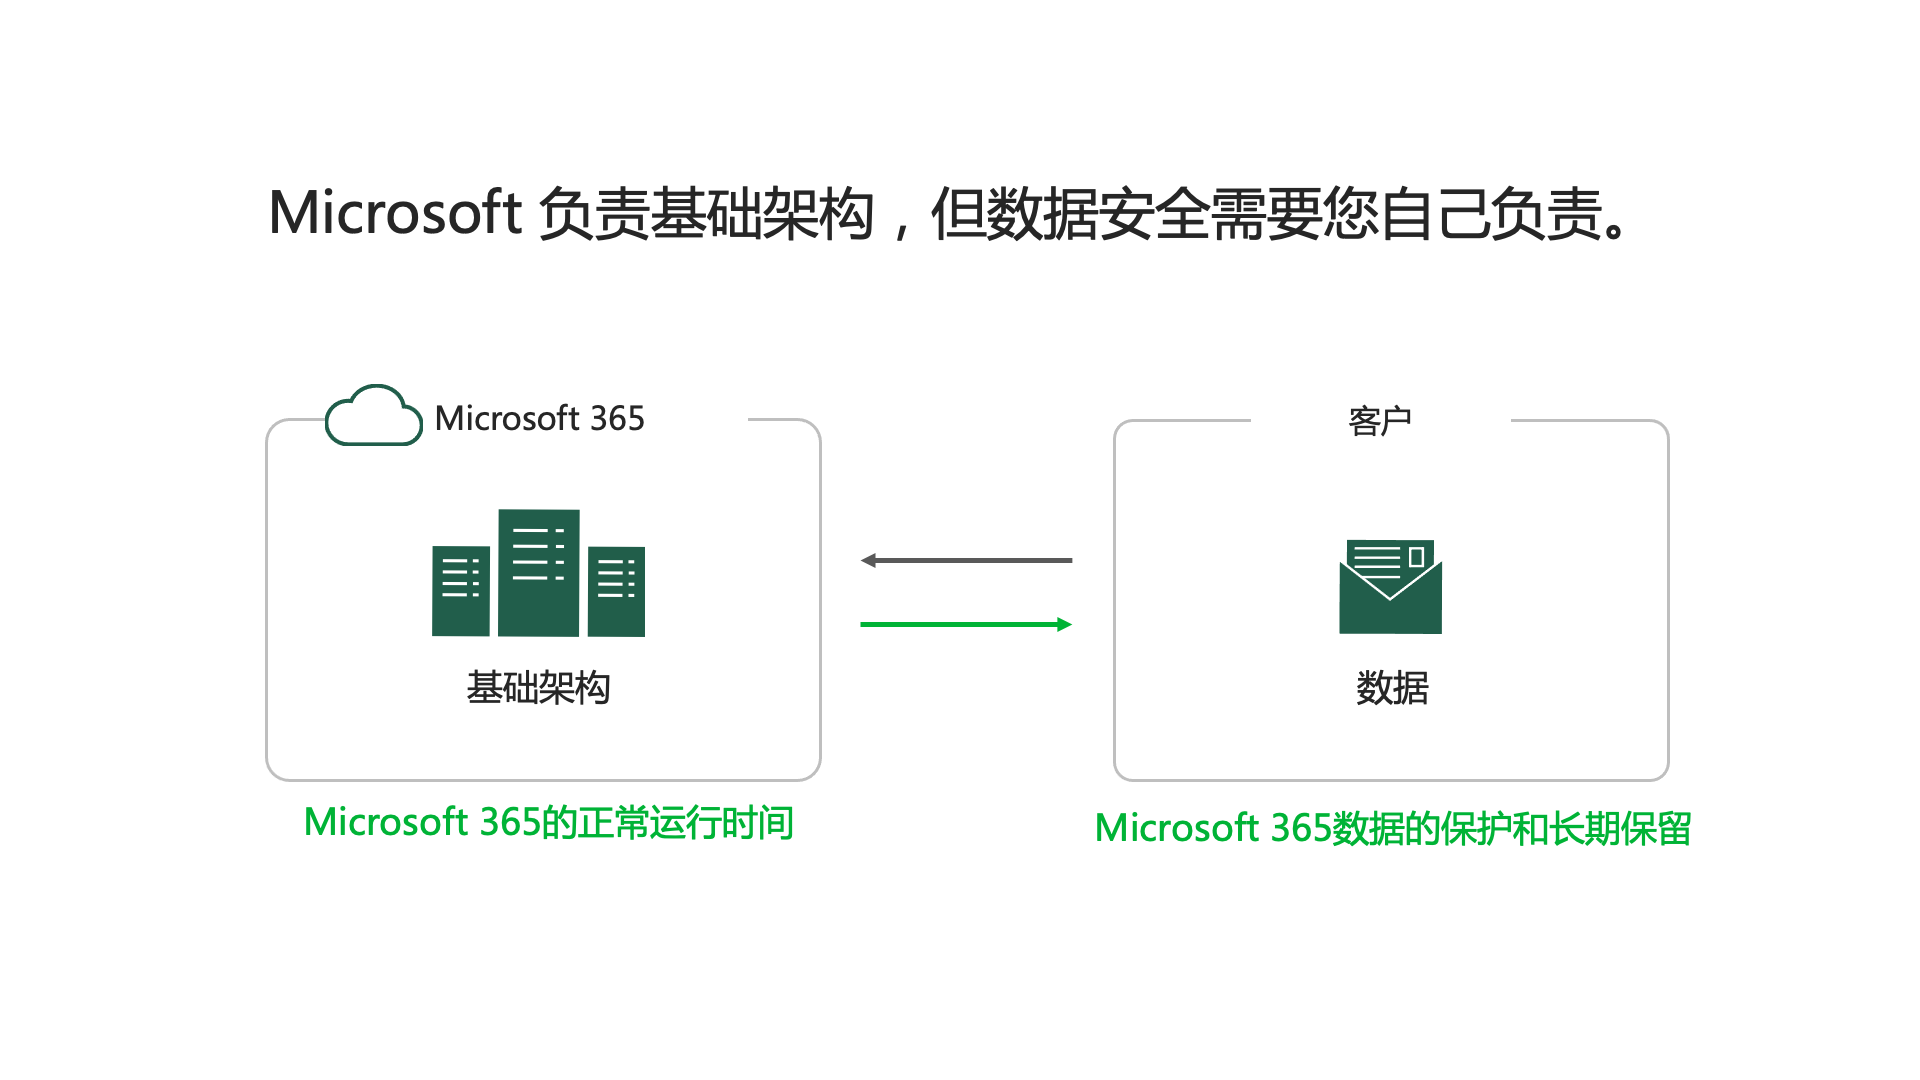 Backup microsoft 365 diagram cn